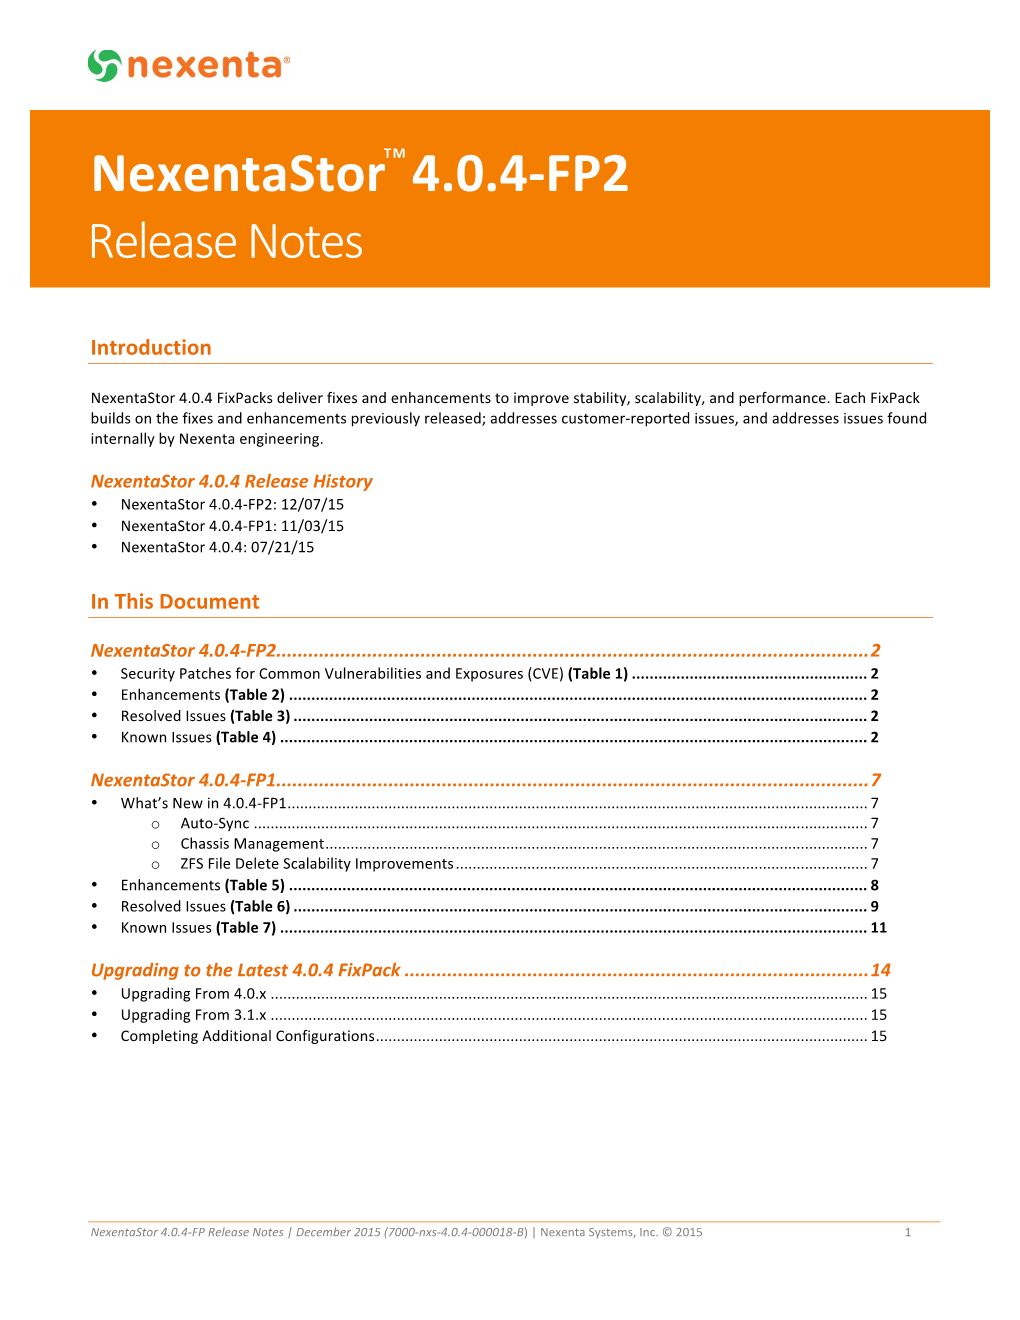 Release Notes 4.0.4 FP2 Nexentastor